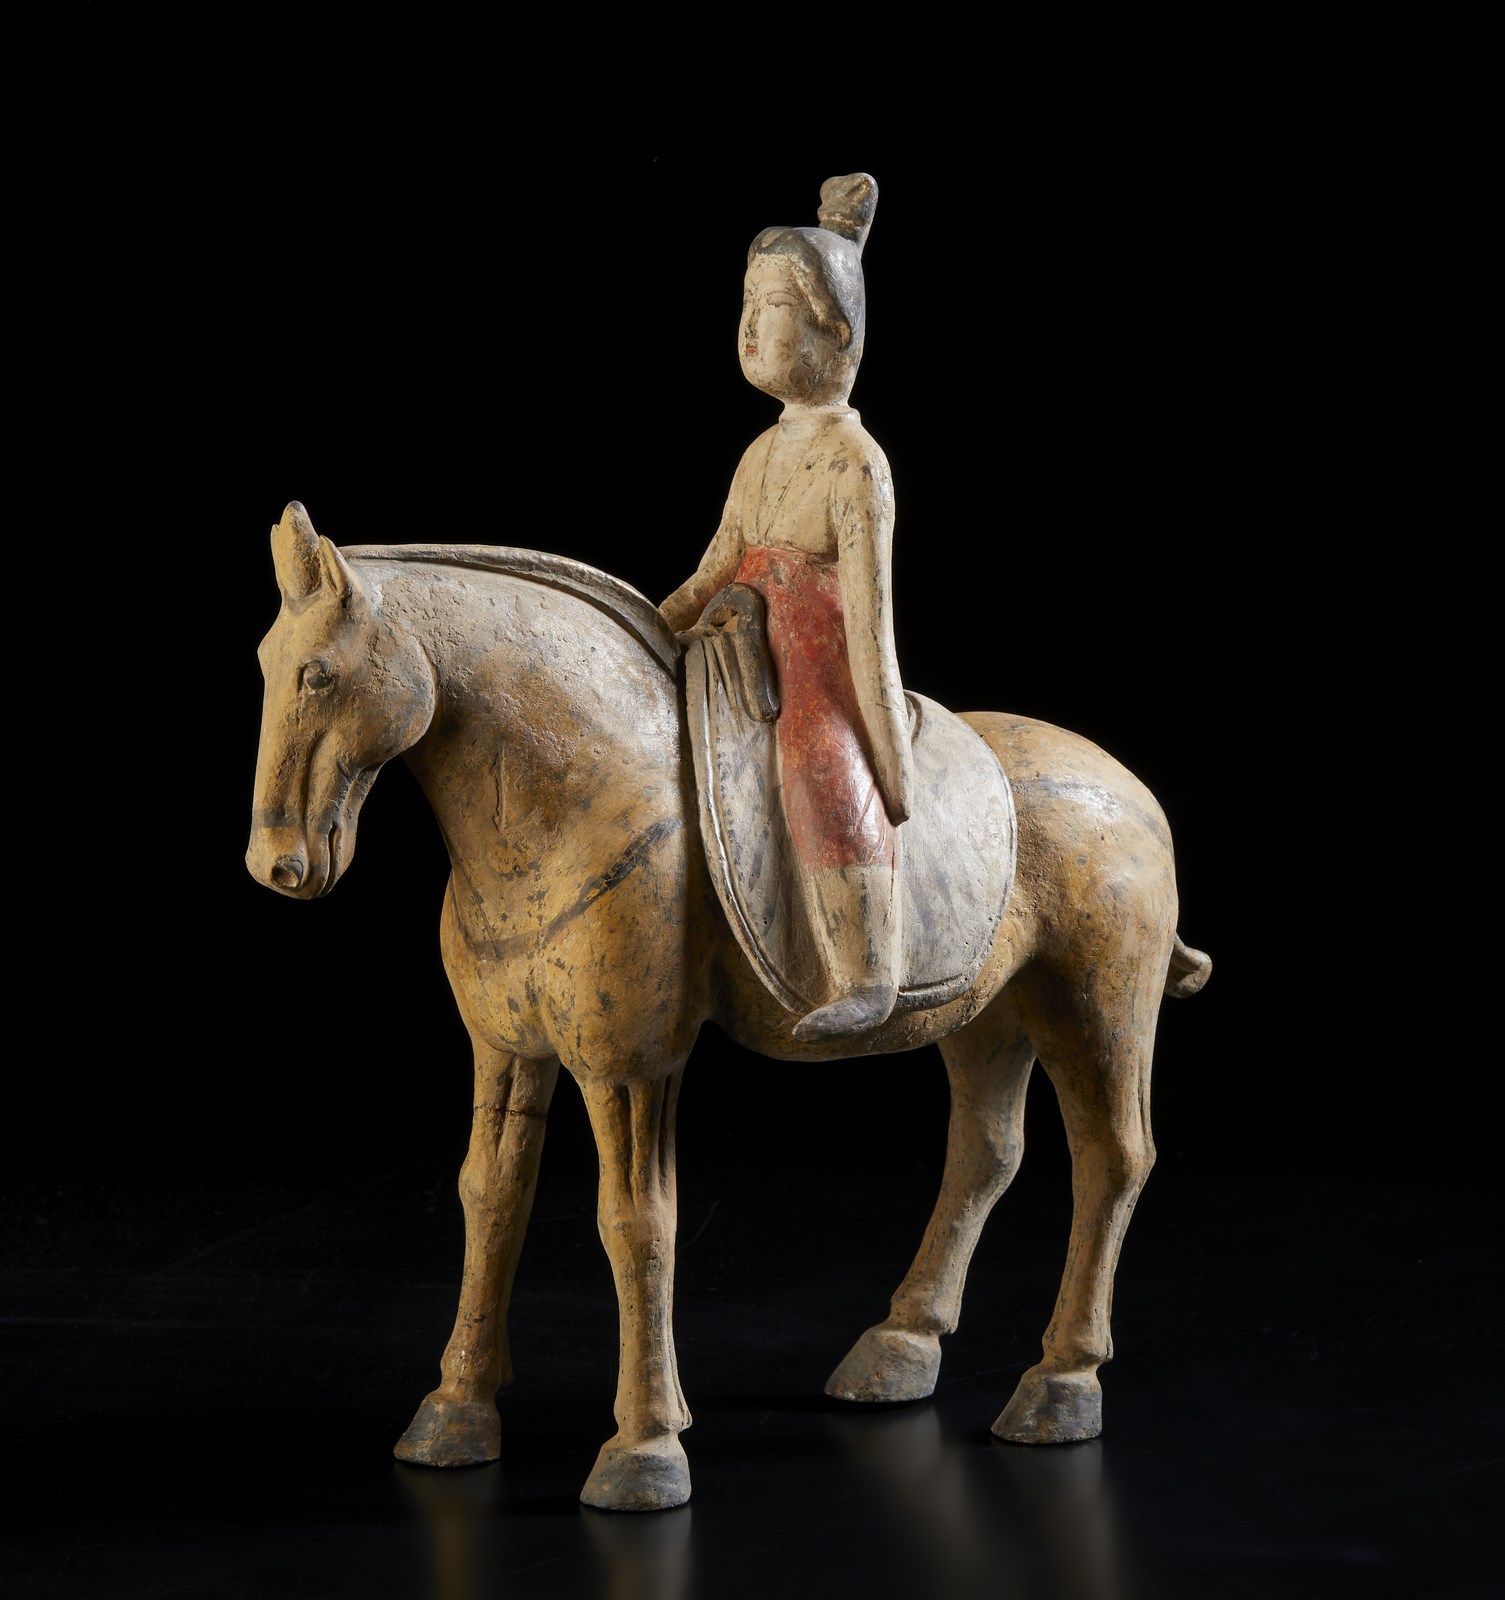 Statua in terracotta raffigurante fanciulla a cavallo
Cina, dinastia Tang, IX secolo (Arte Cinese )